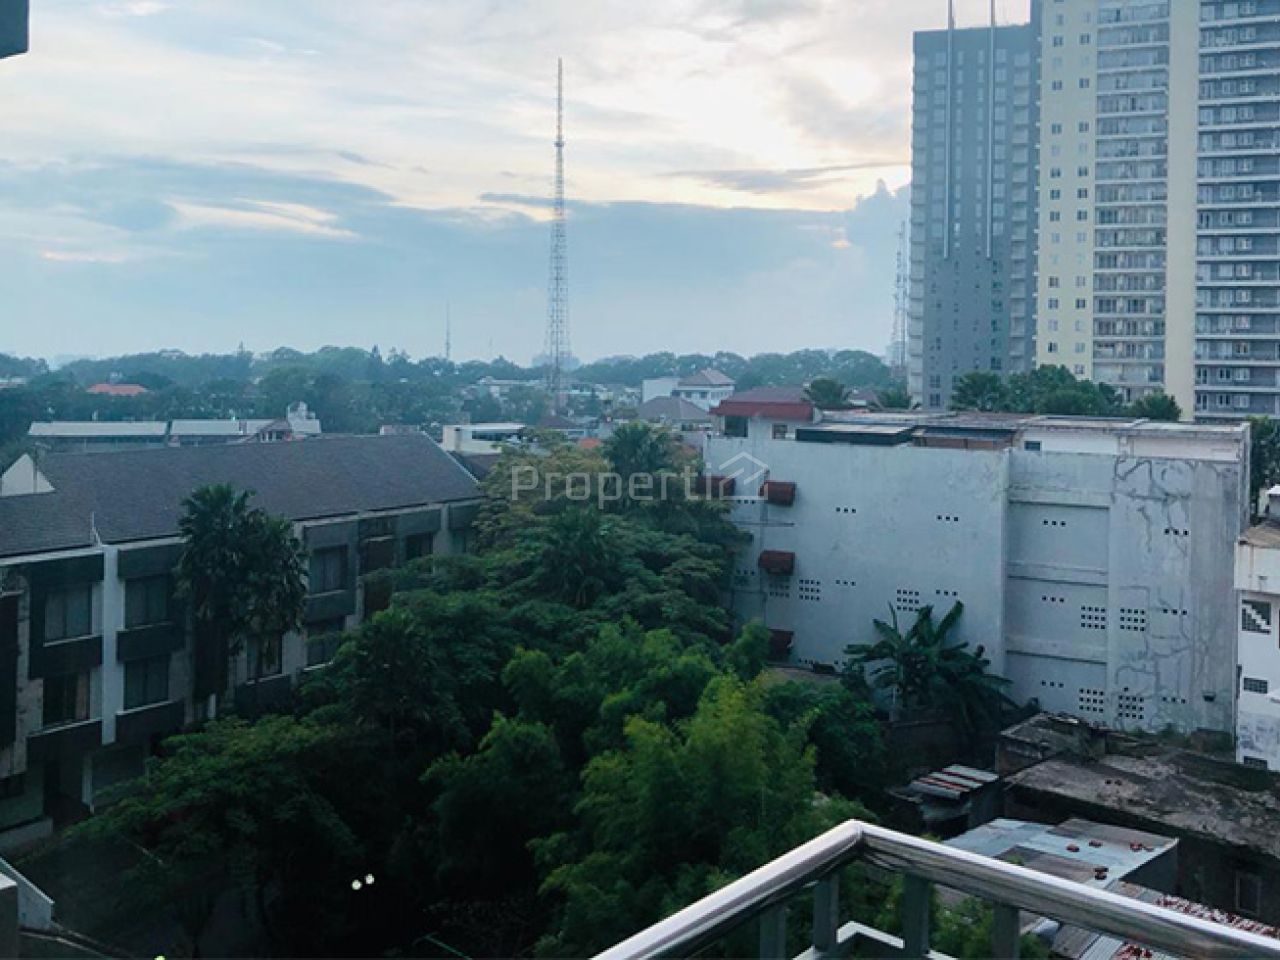 2BR Apartment Unit at Galeri Ciumbuleuit 1, Bandung City, Cidadap